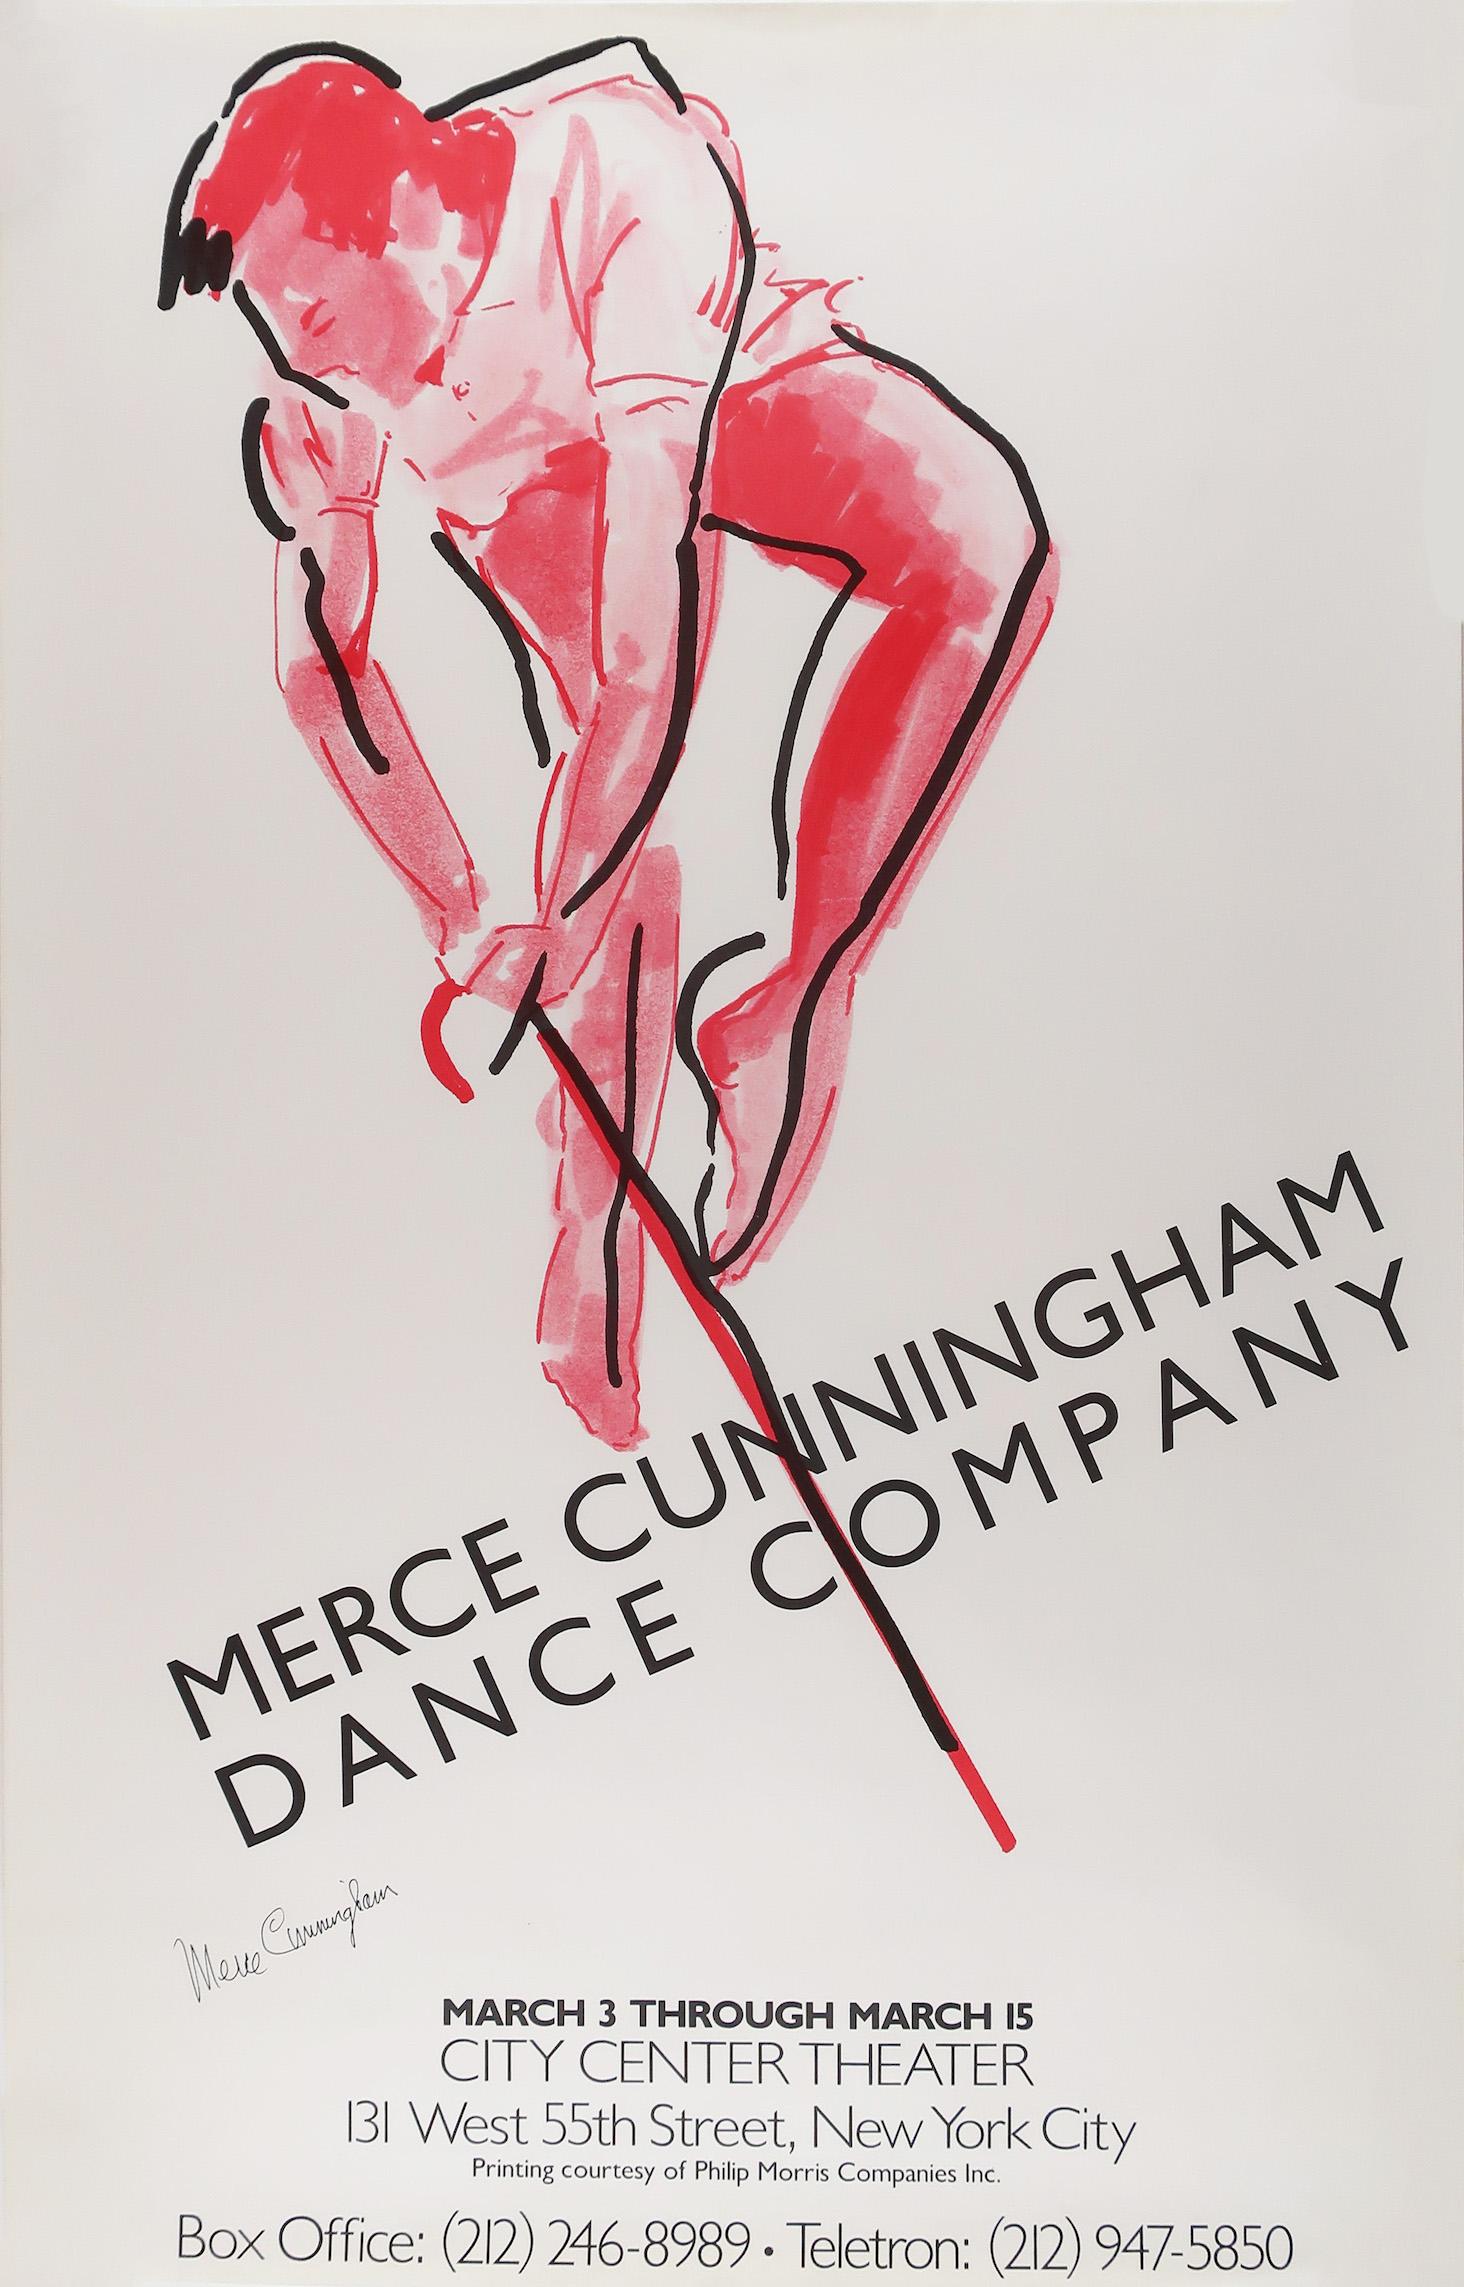 ""Compagnie de danse Merce Cunningham""